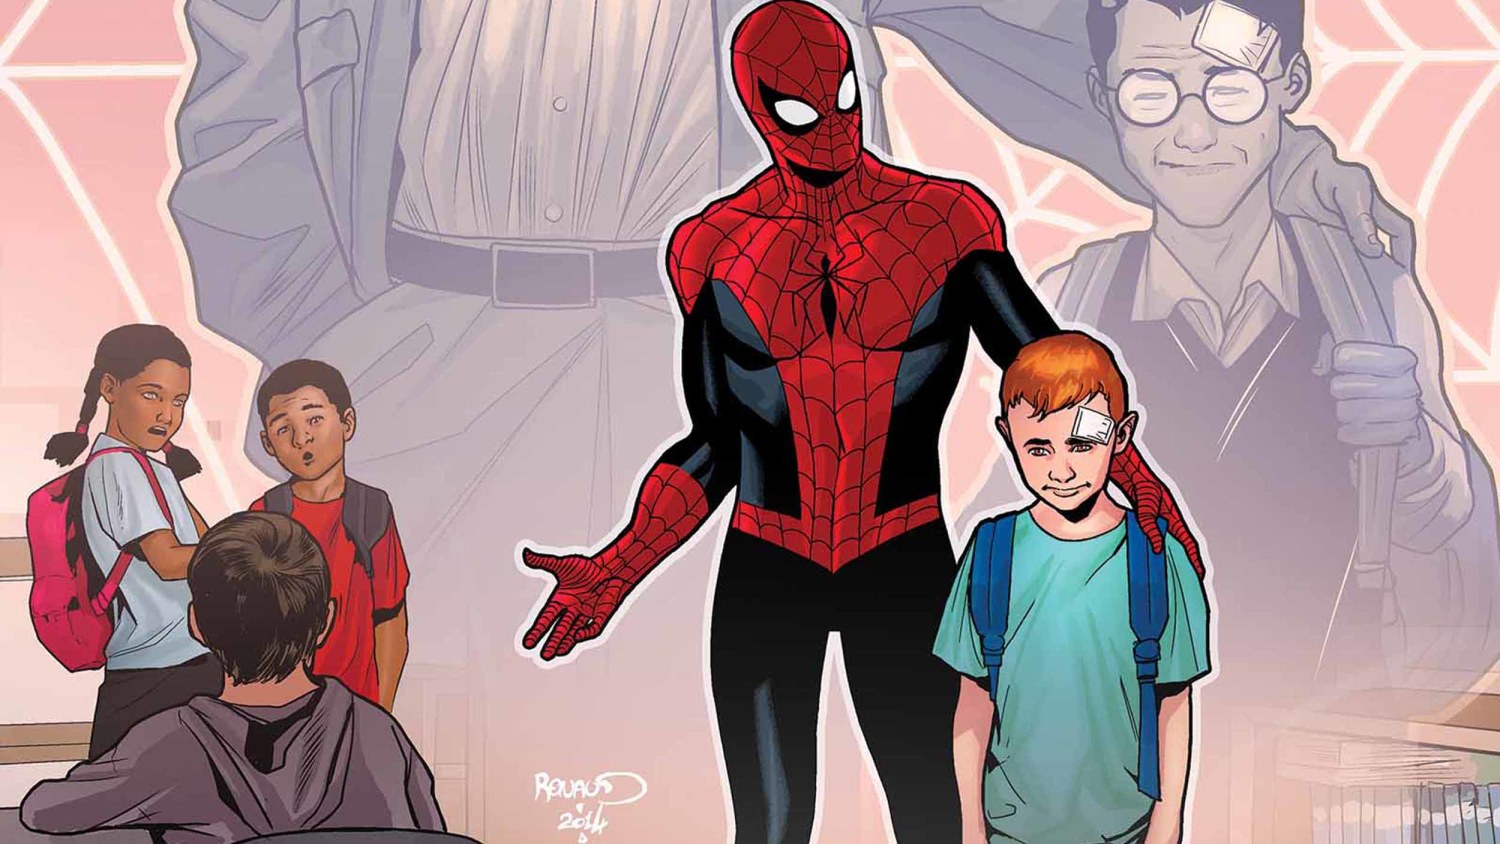 Marvel superheroes battle bullying in new comic